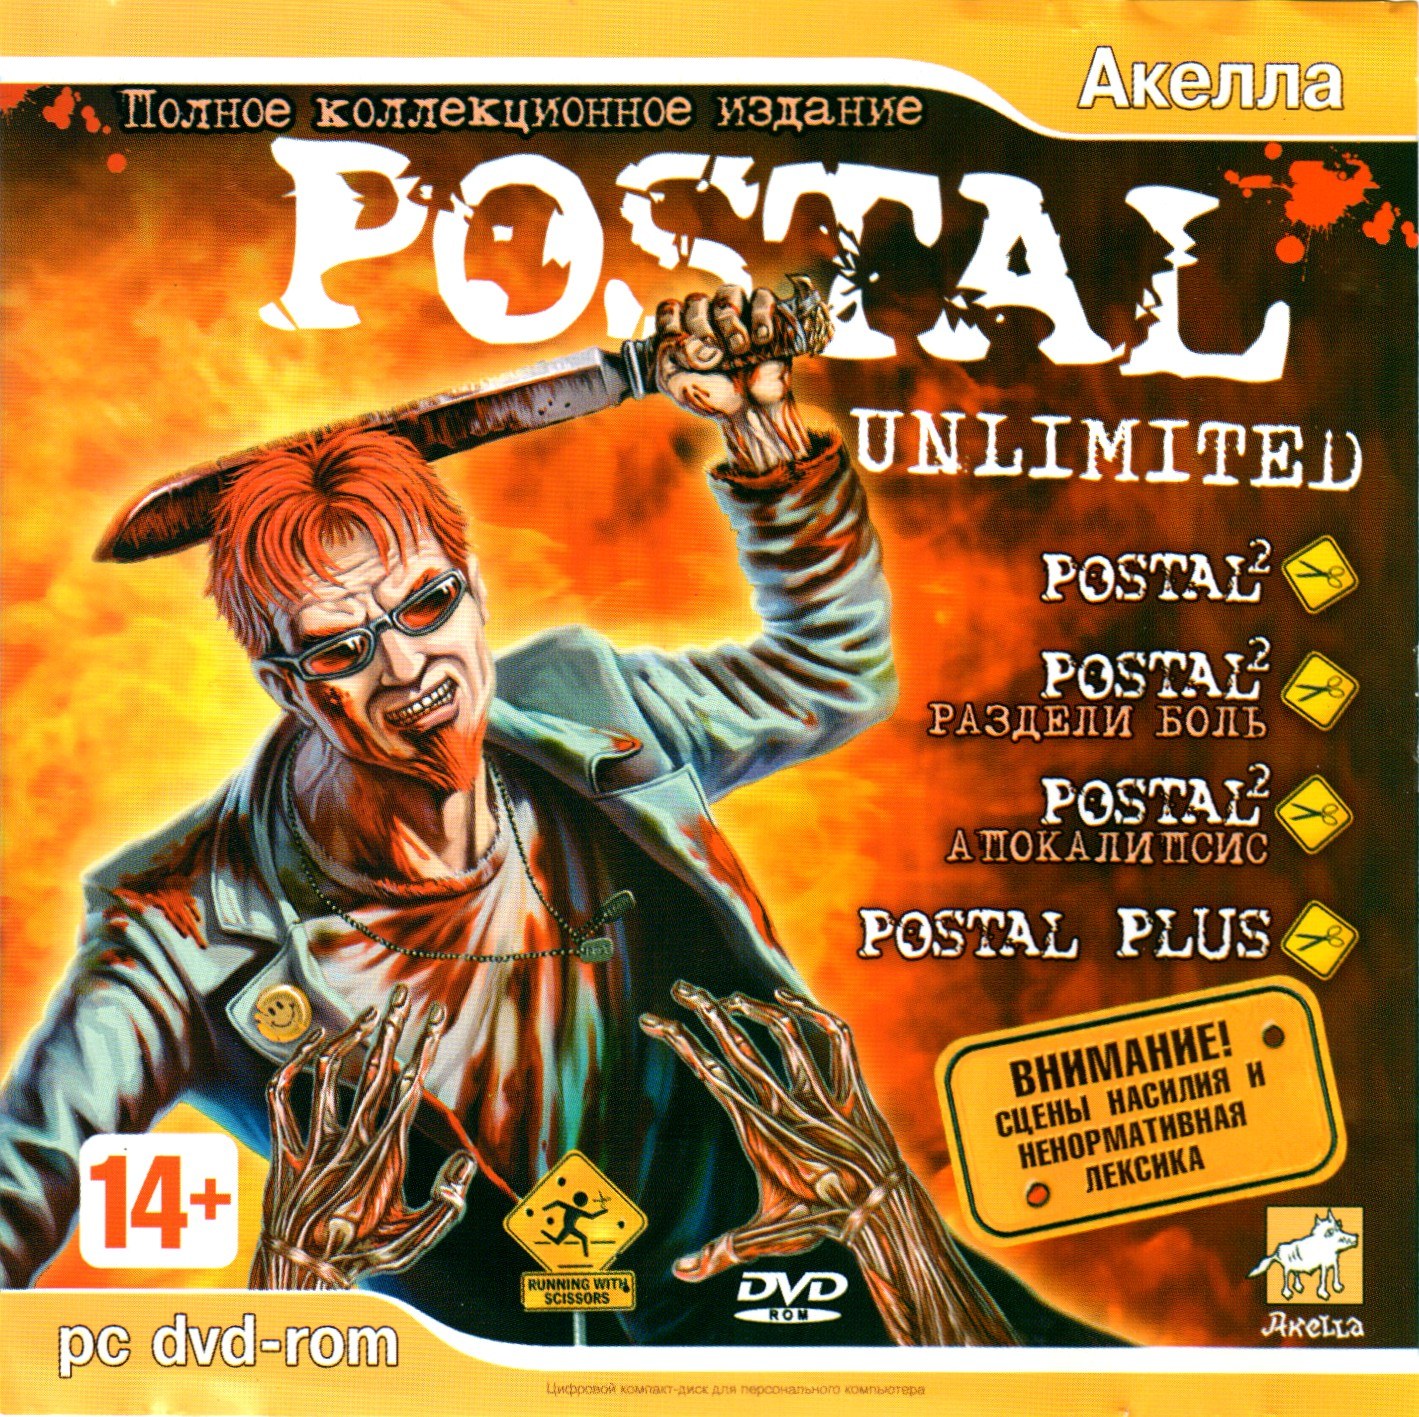 Postal 2 awp delete review прохождение фото 68